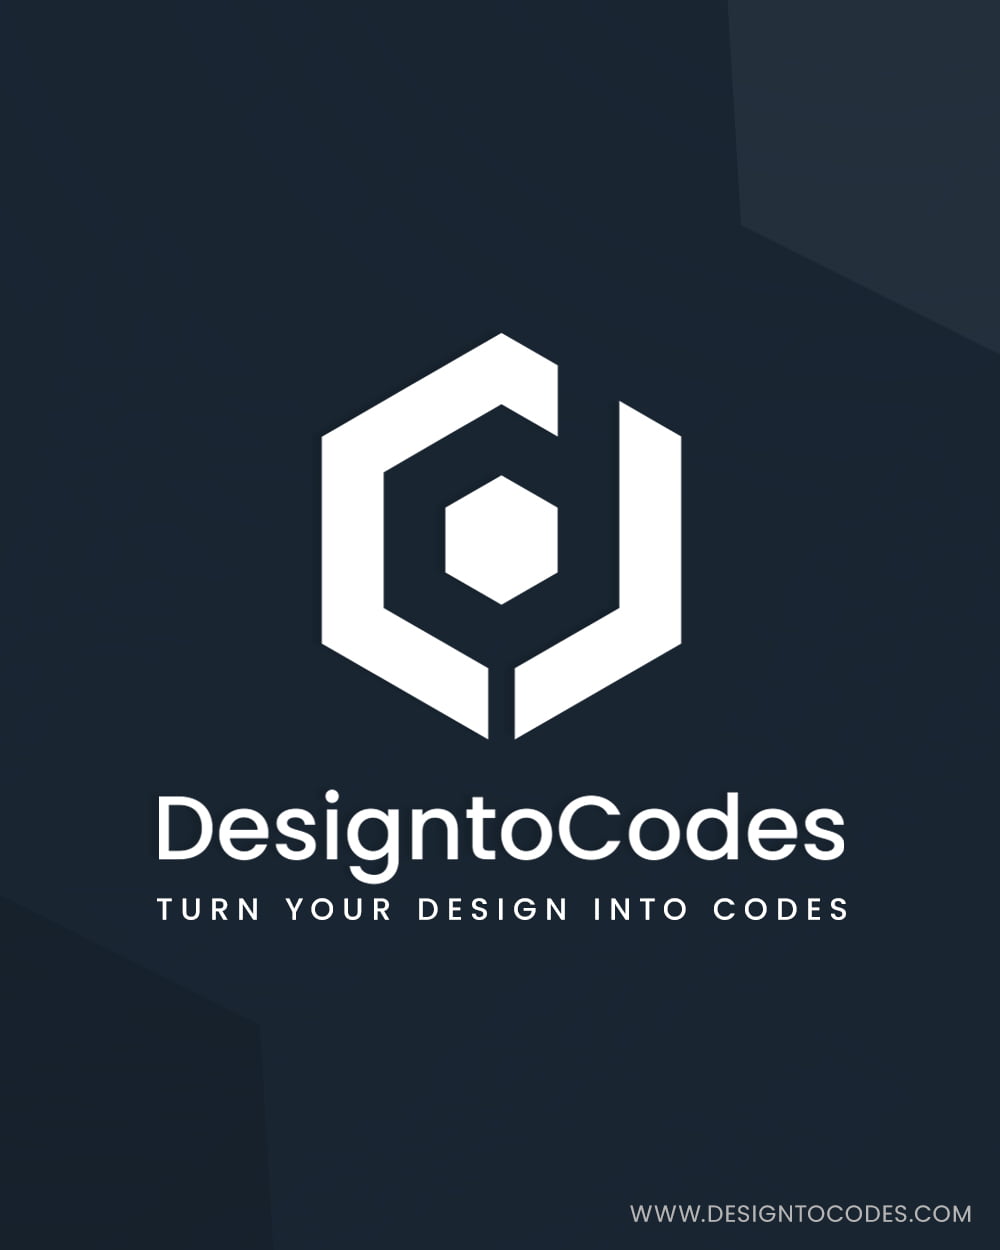 DesignToCodes - About Image